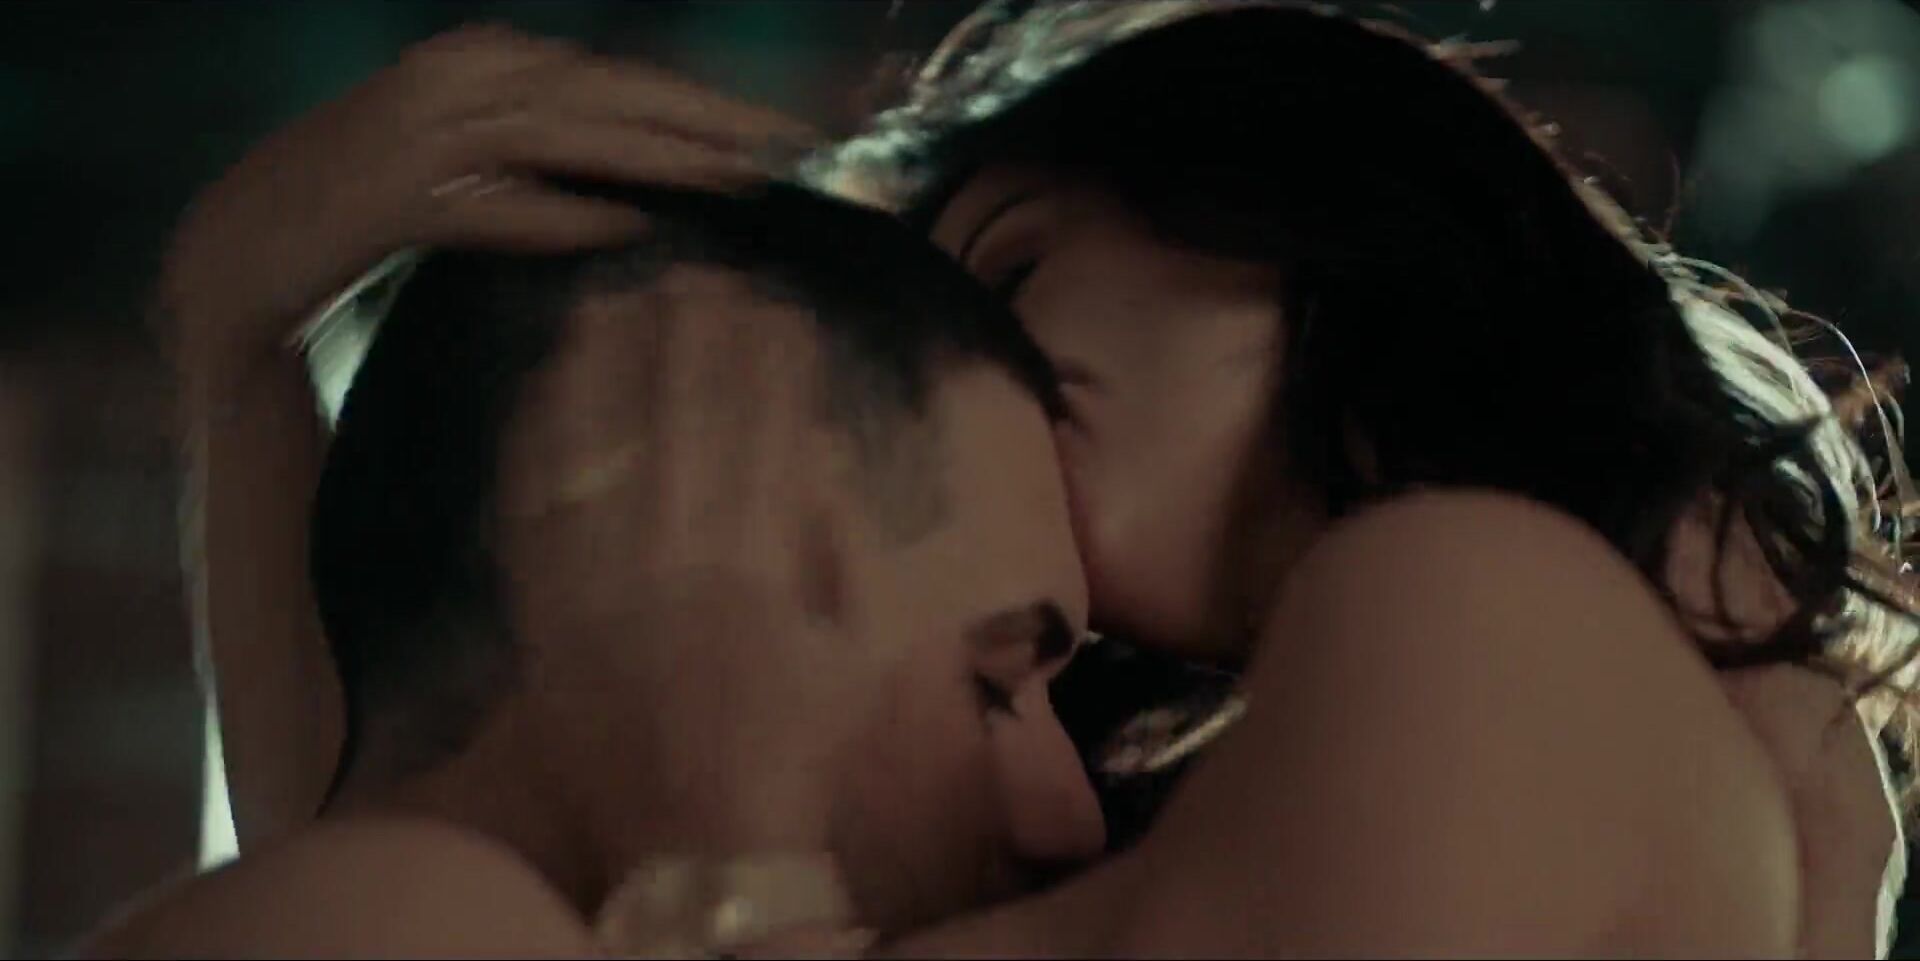 Jav-Stream Hot nude scene compilation of sexy Latina Mayte Perroni from Dark Desire s01e03 Yanks Featured